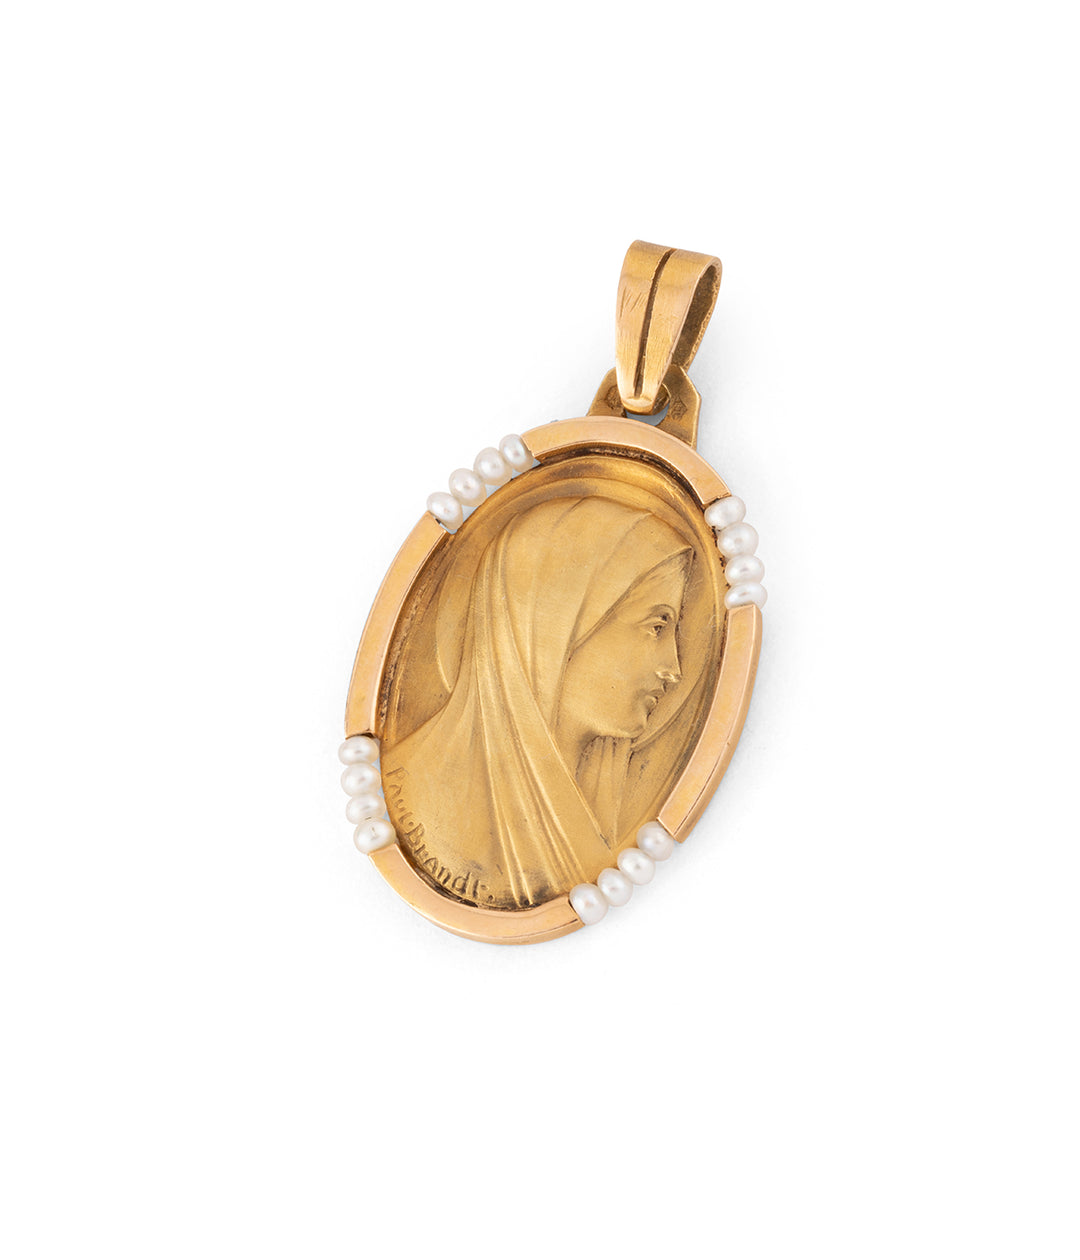 Art deco religious medal gold "Haize" - Caillou Paris